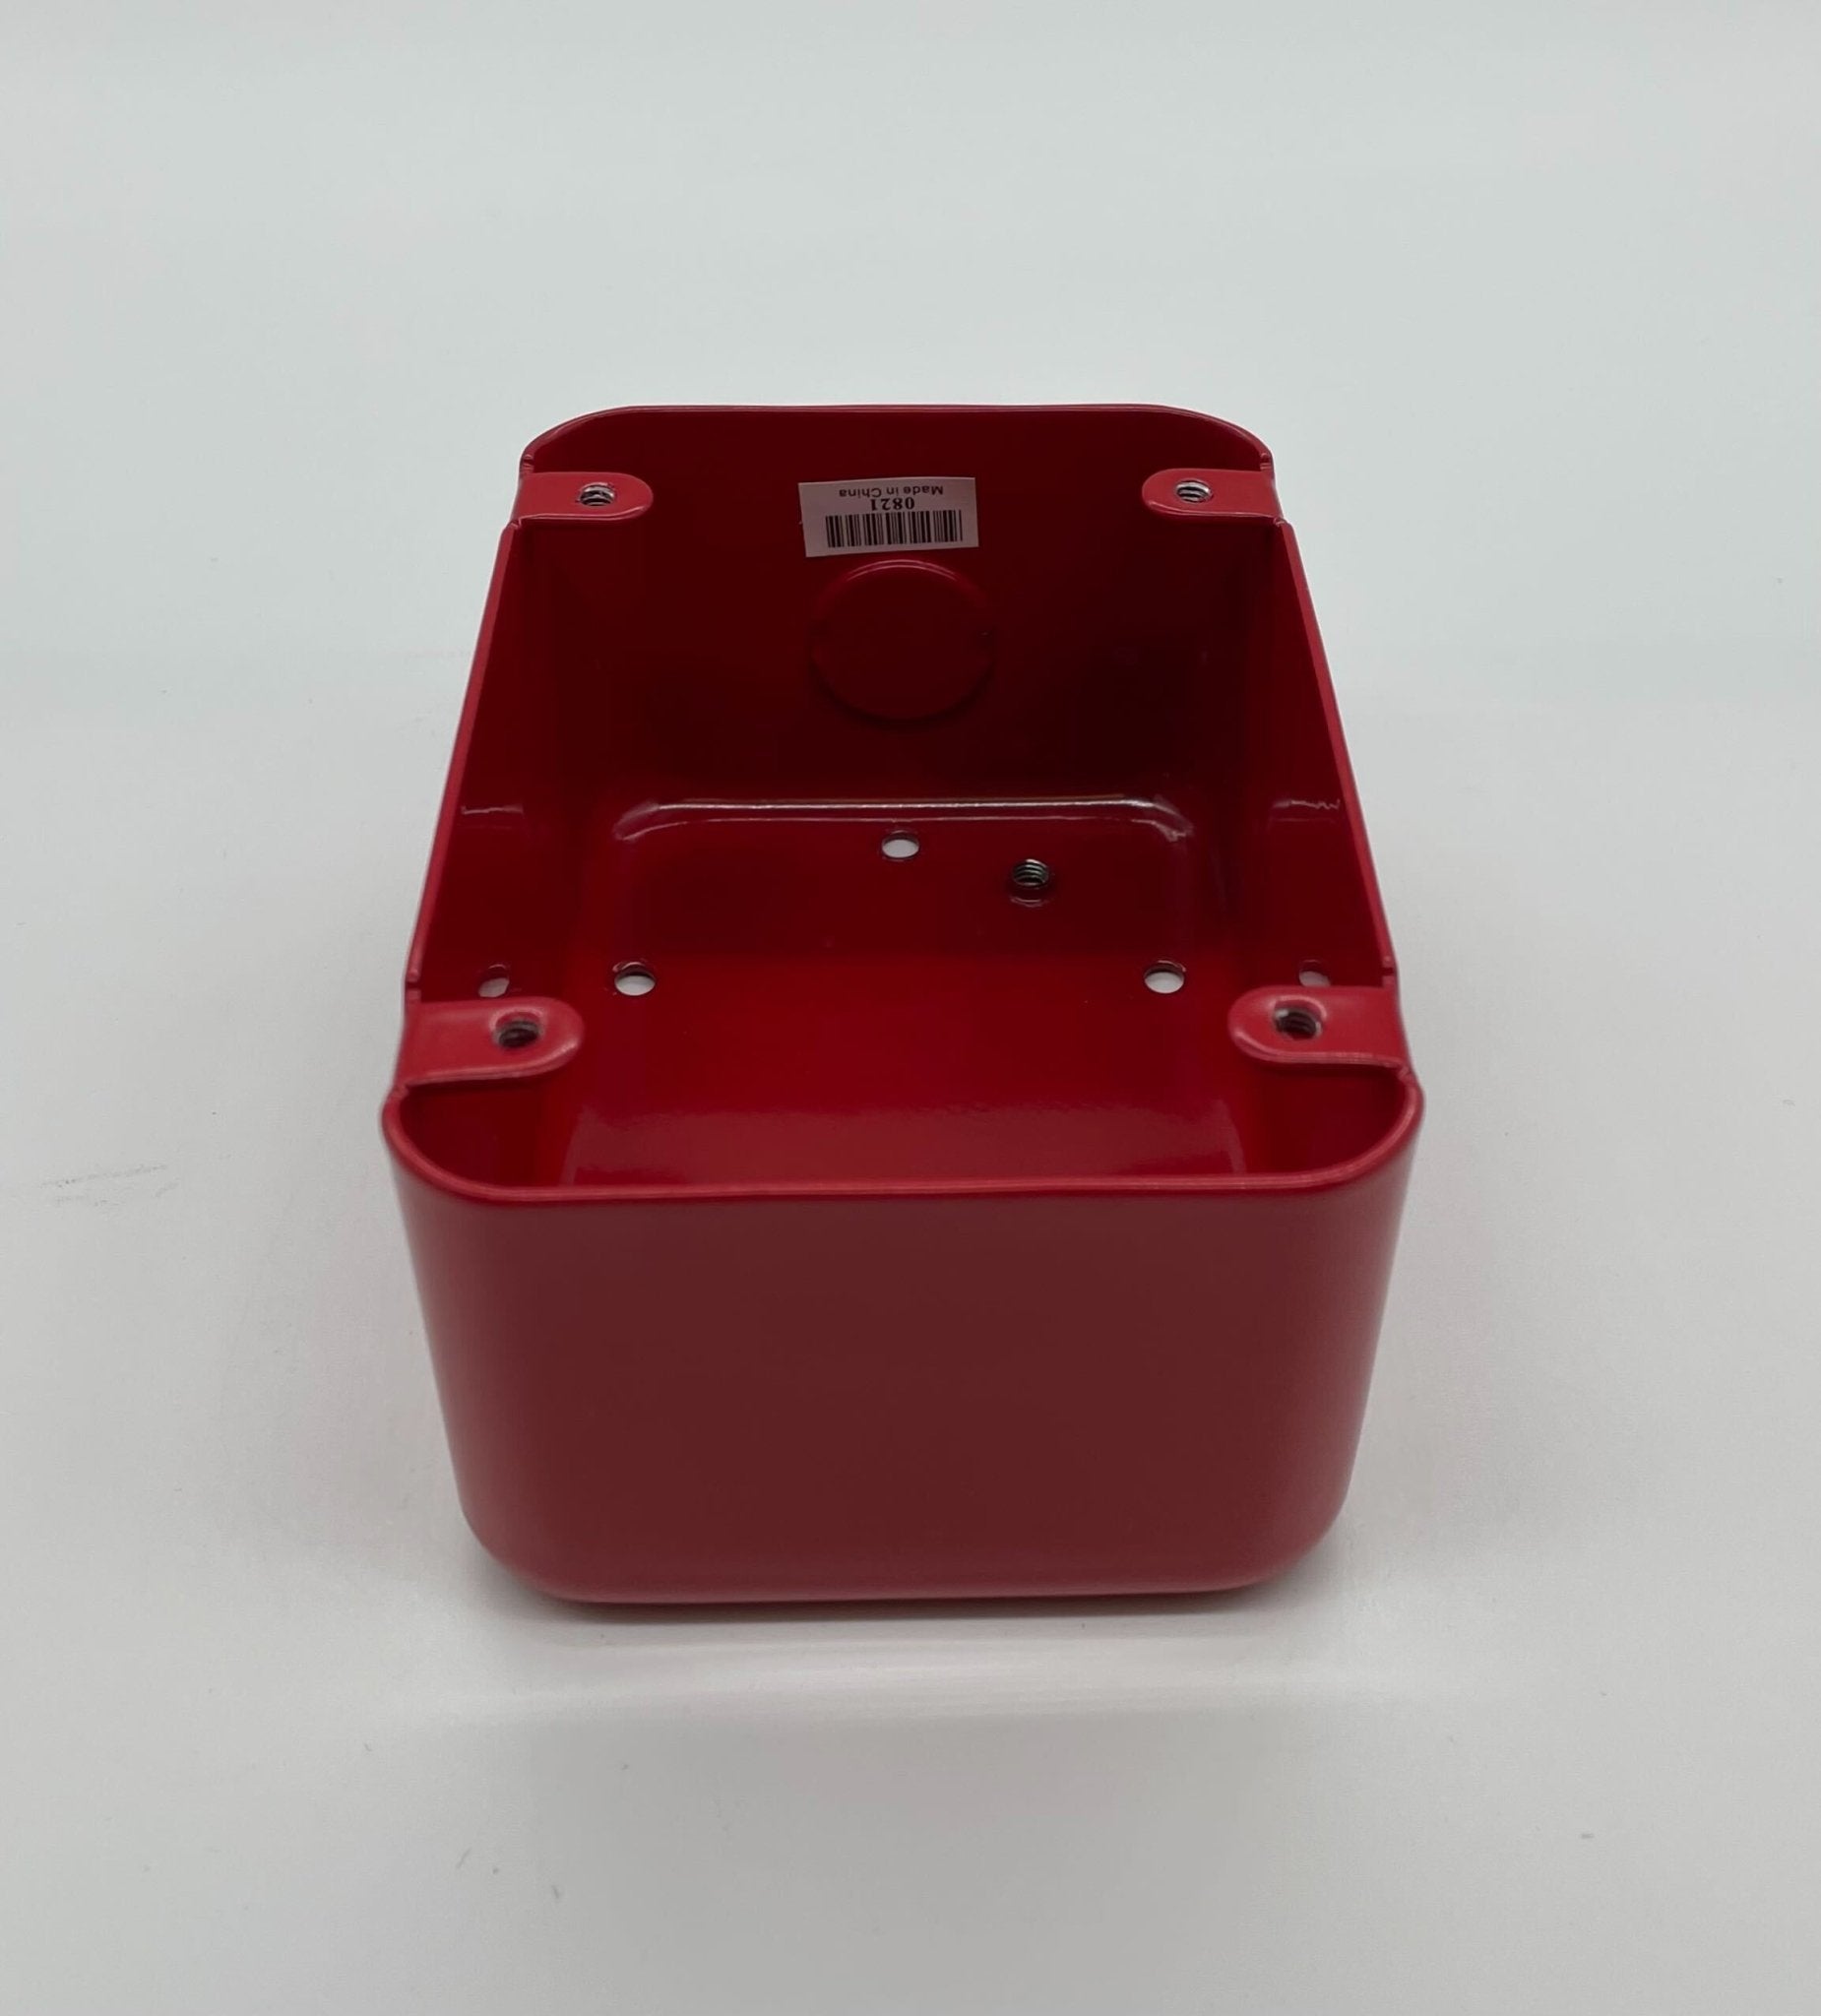 Simplex 2975-9212 - The Fire Alarm Supplier